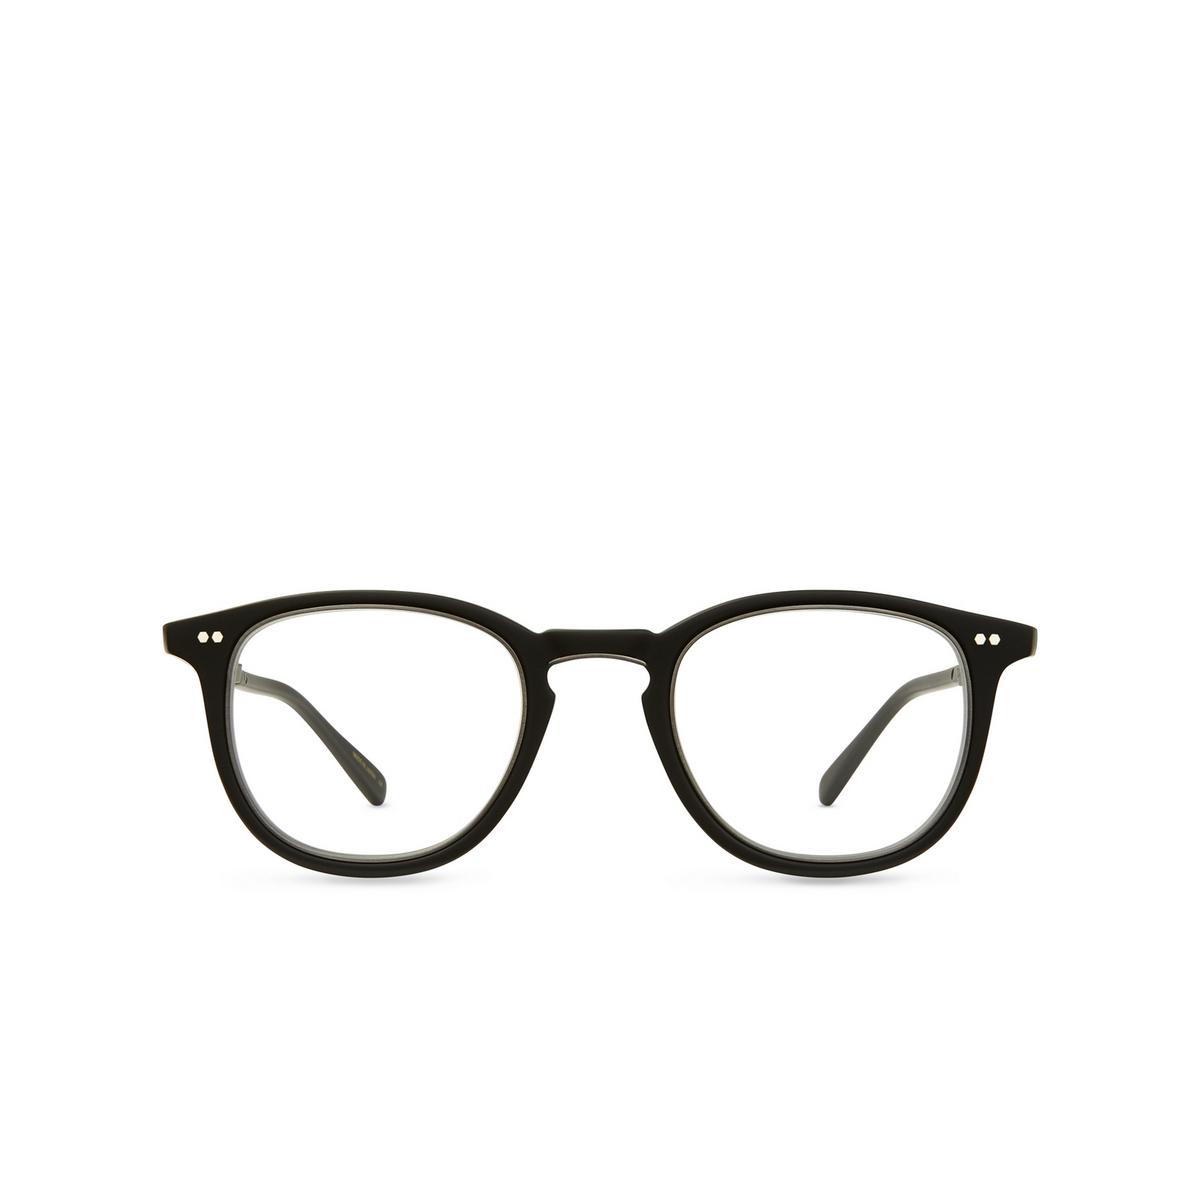 Mr. Leight COOPERS C Eyeglasses MBK-PW Matte Black-Pewter - 1/3